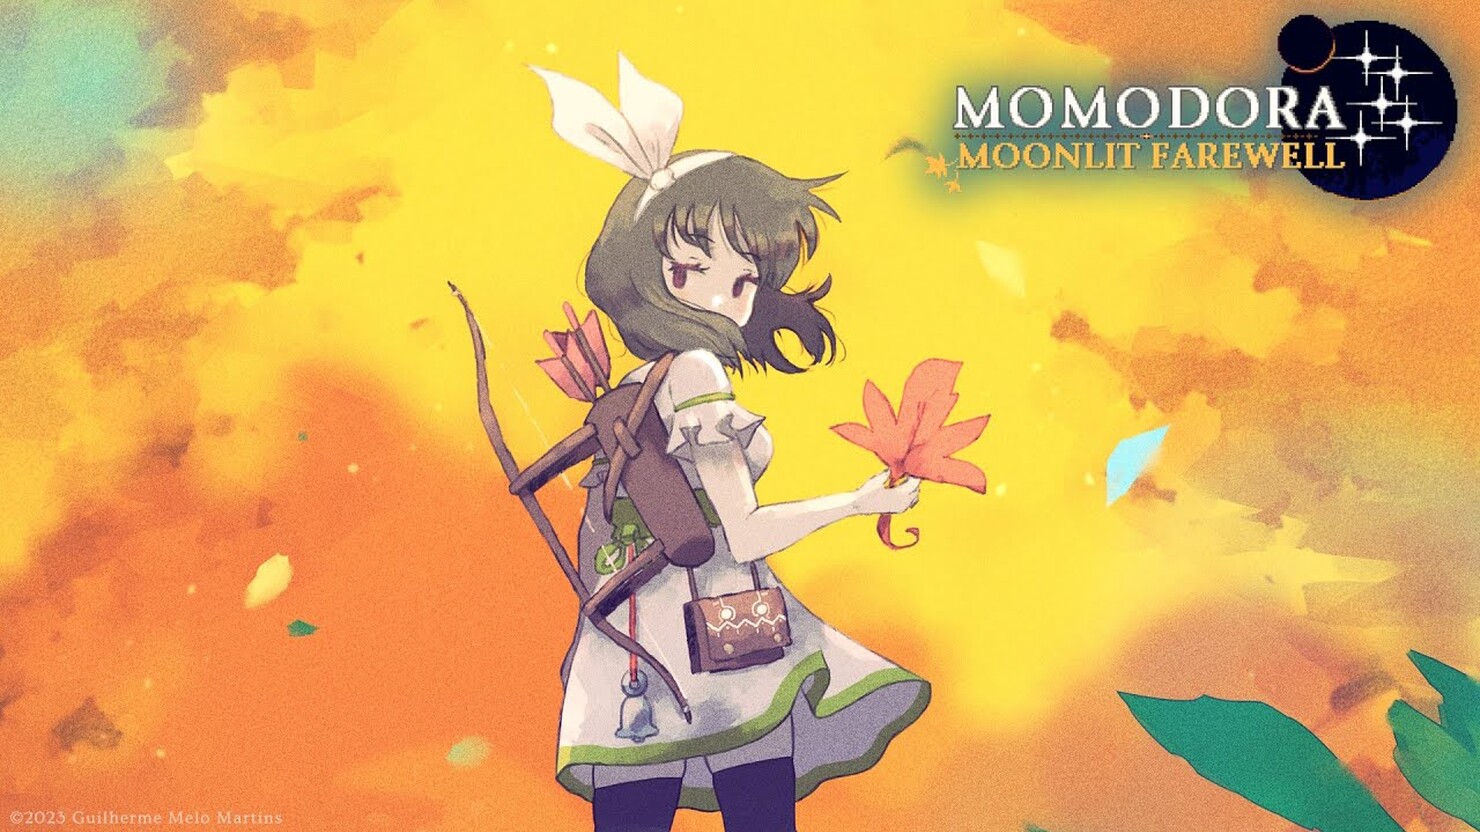 Momodora: Moonlit Farewell #4 (Кабан - неистовый демон)